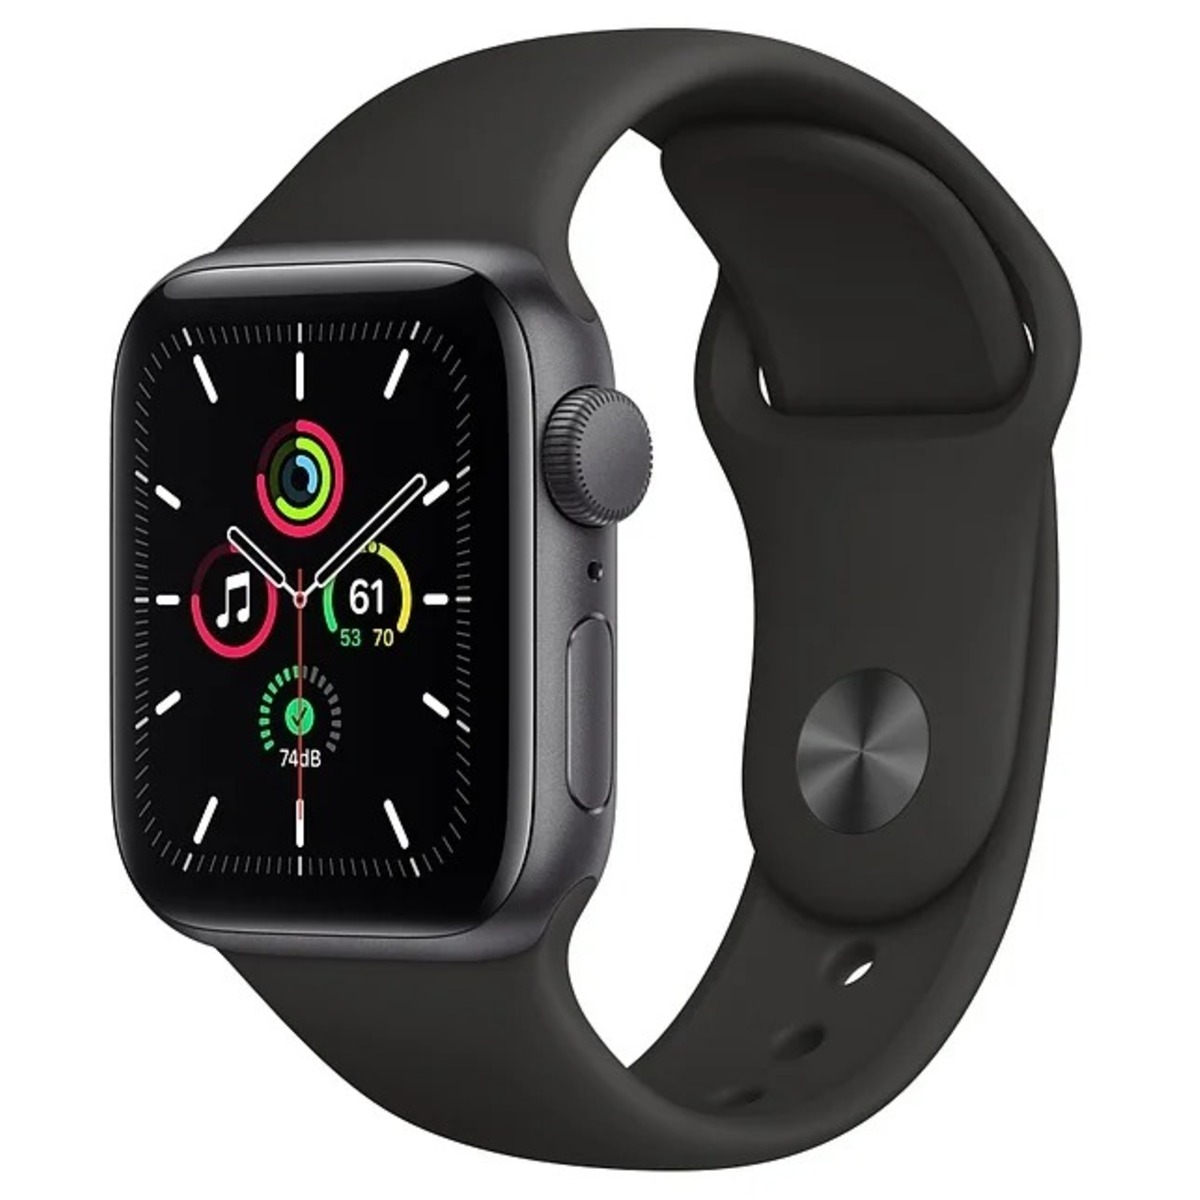 Умные часы Apple Watch Series 6 GPS 44mm Aluminum Case with Sport Band M00H3RU/A (Цвет: Space Gray/Black)